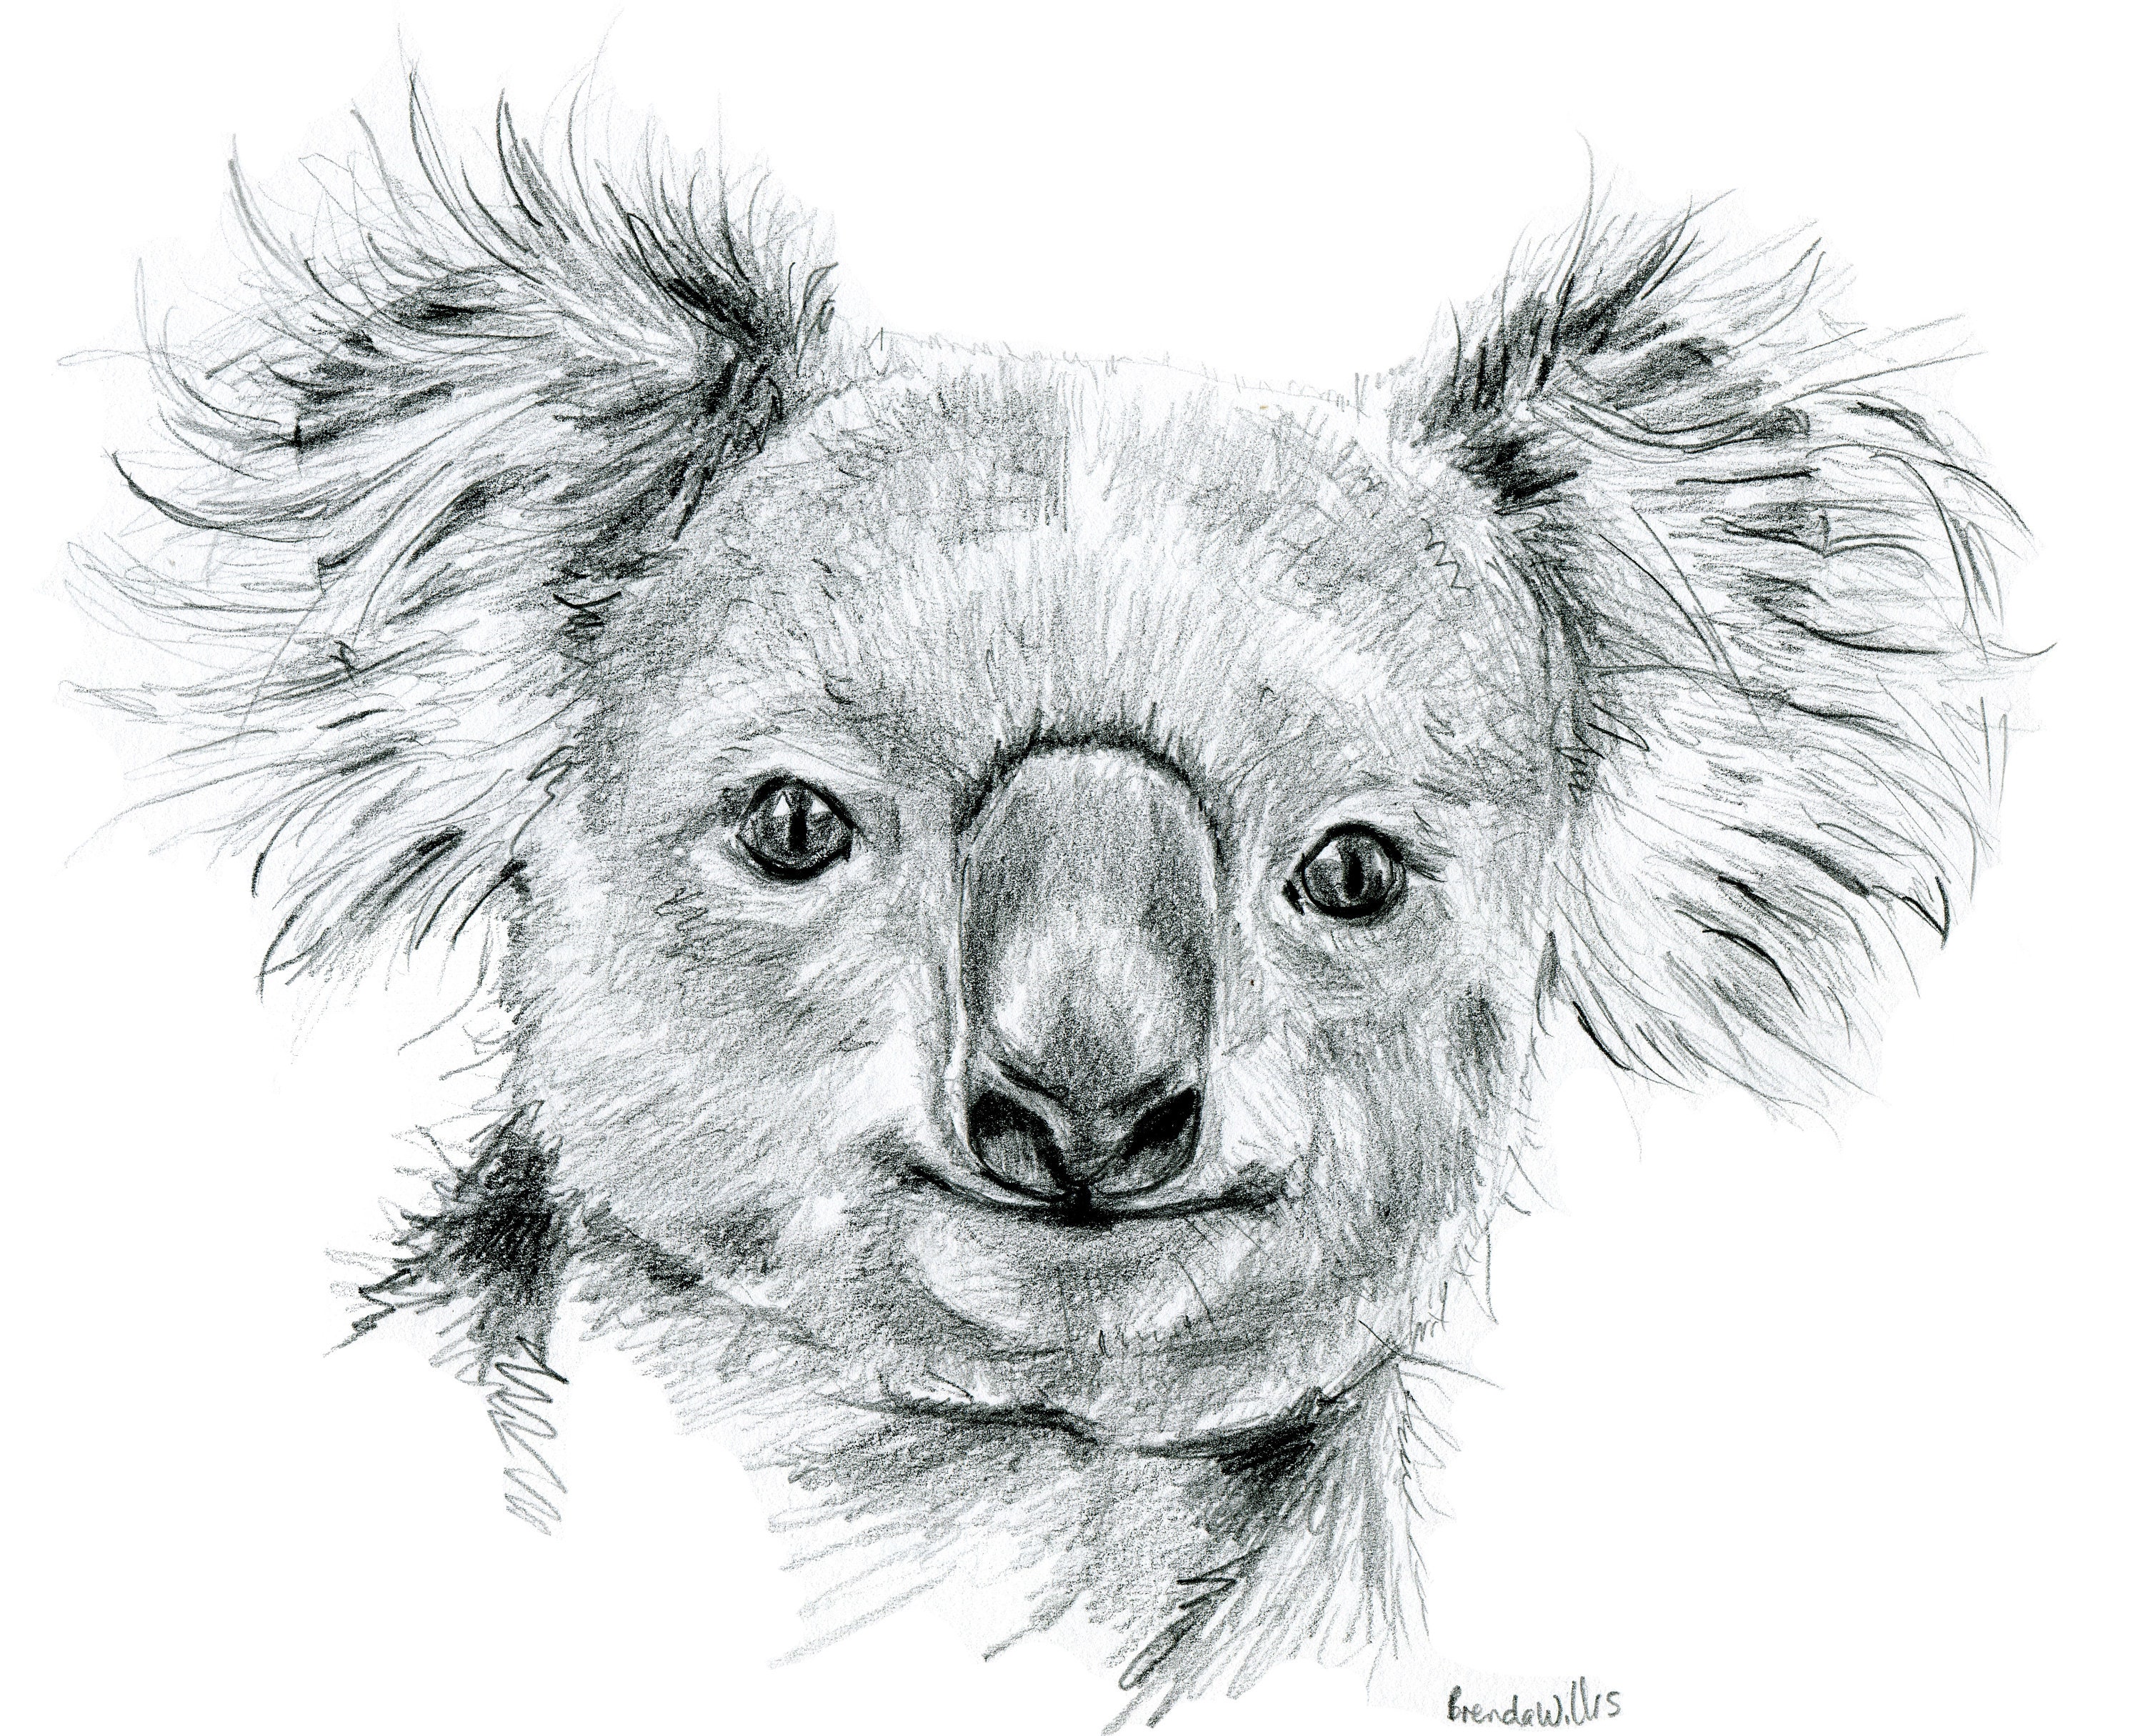 Hand Drawn Koala Portrait Drawing Print. Black and White Sketch